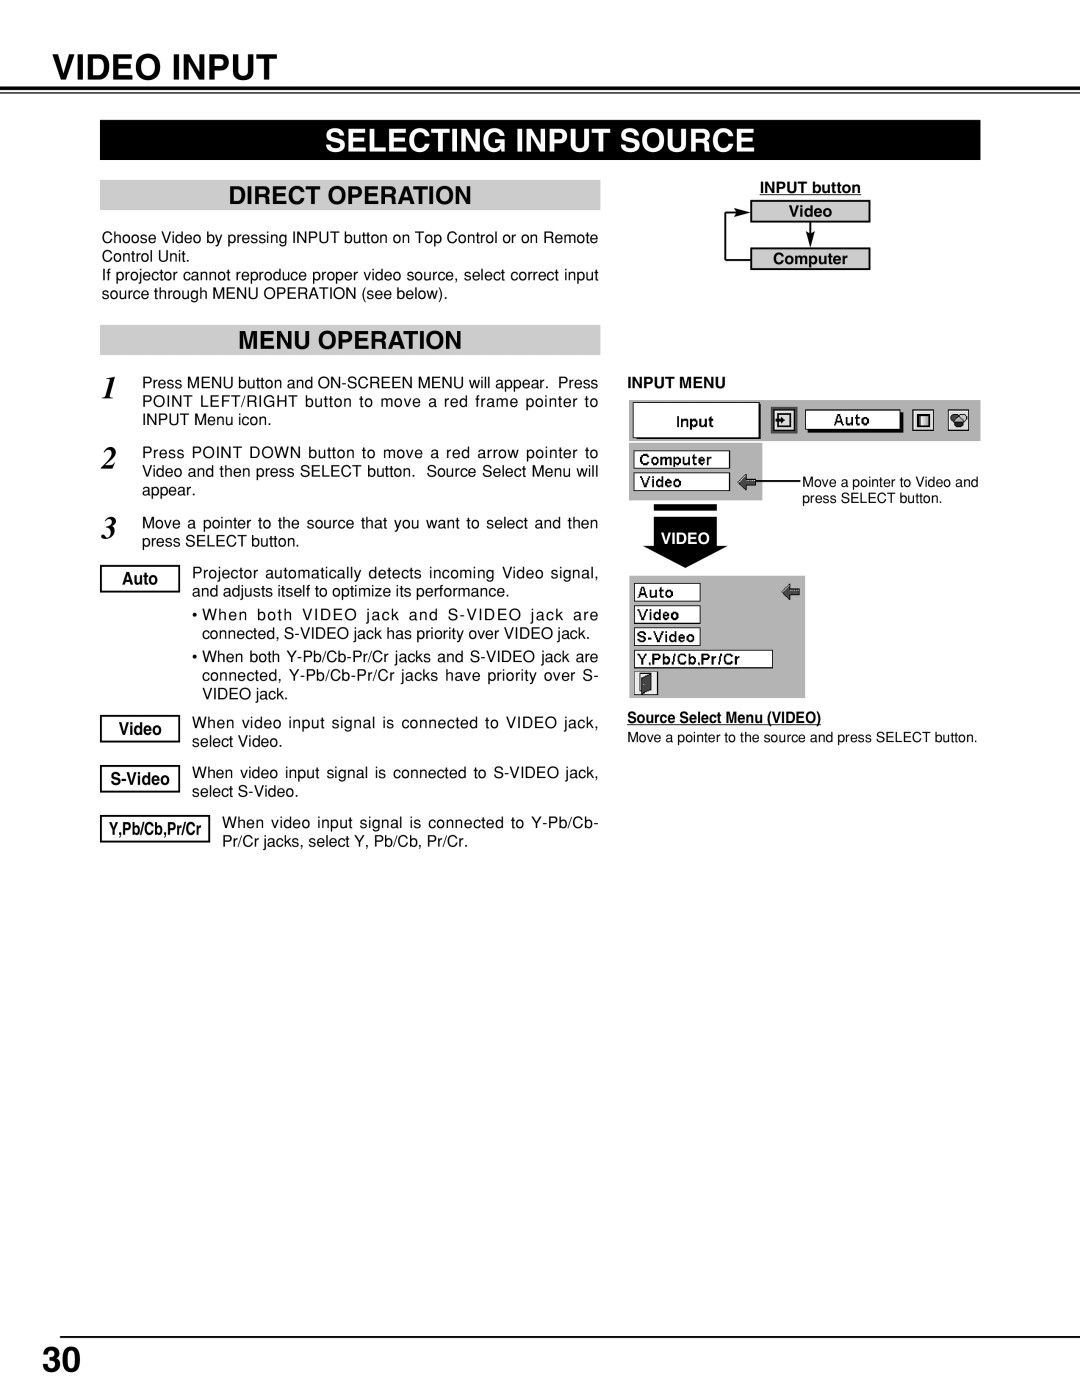 BOXLIGHT CP-19t manual Video Input, Selecting Input Source, Direct Operation, Menu Operation, INPUT button Video Computer 